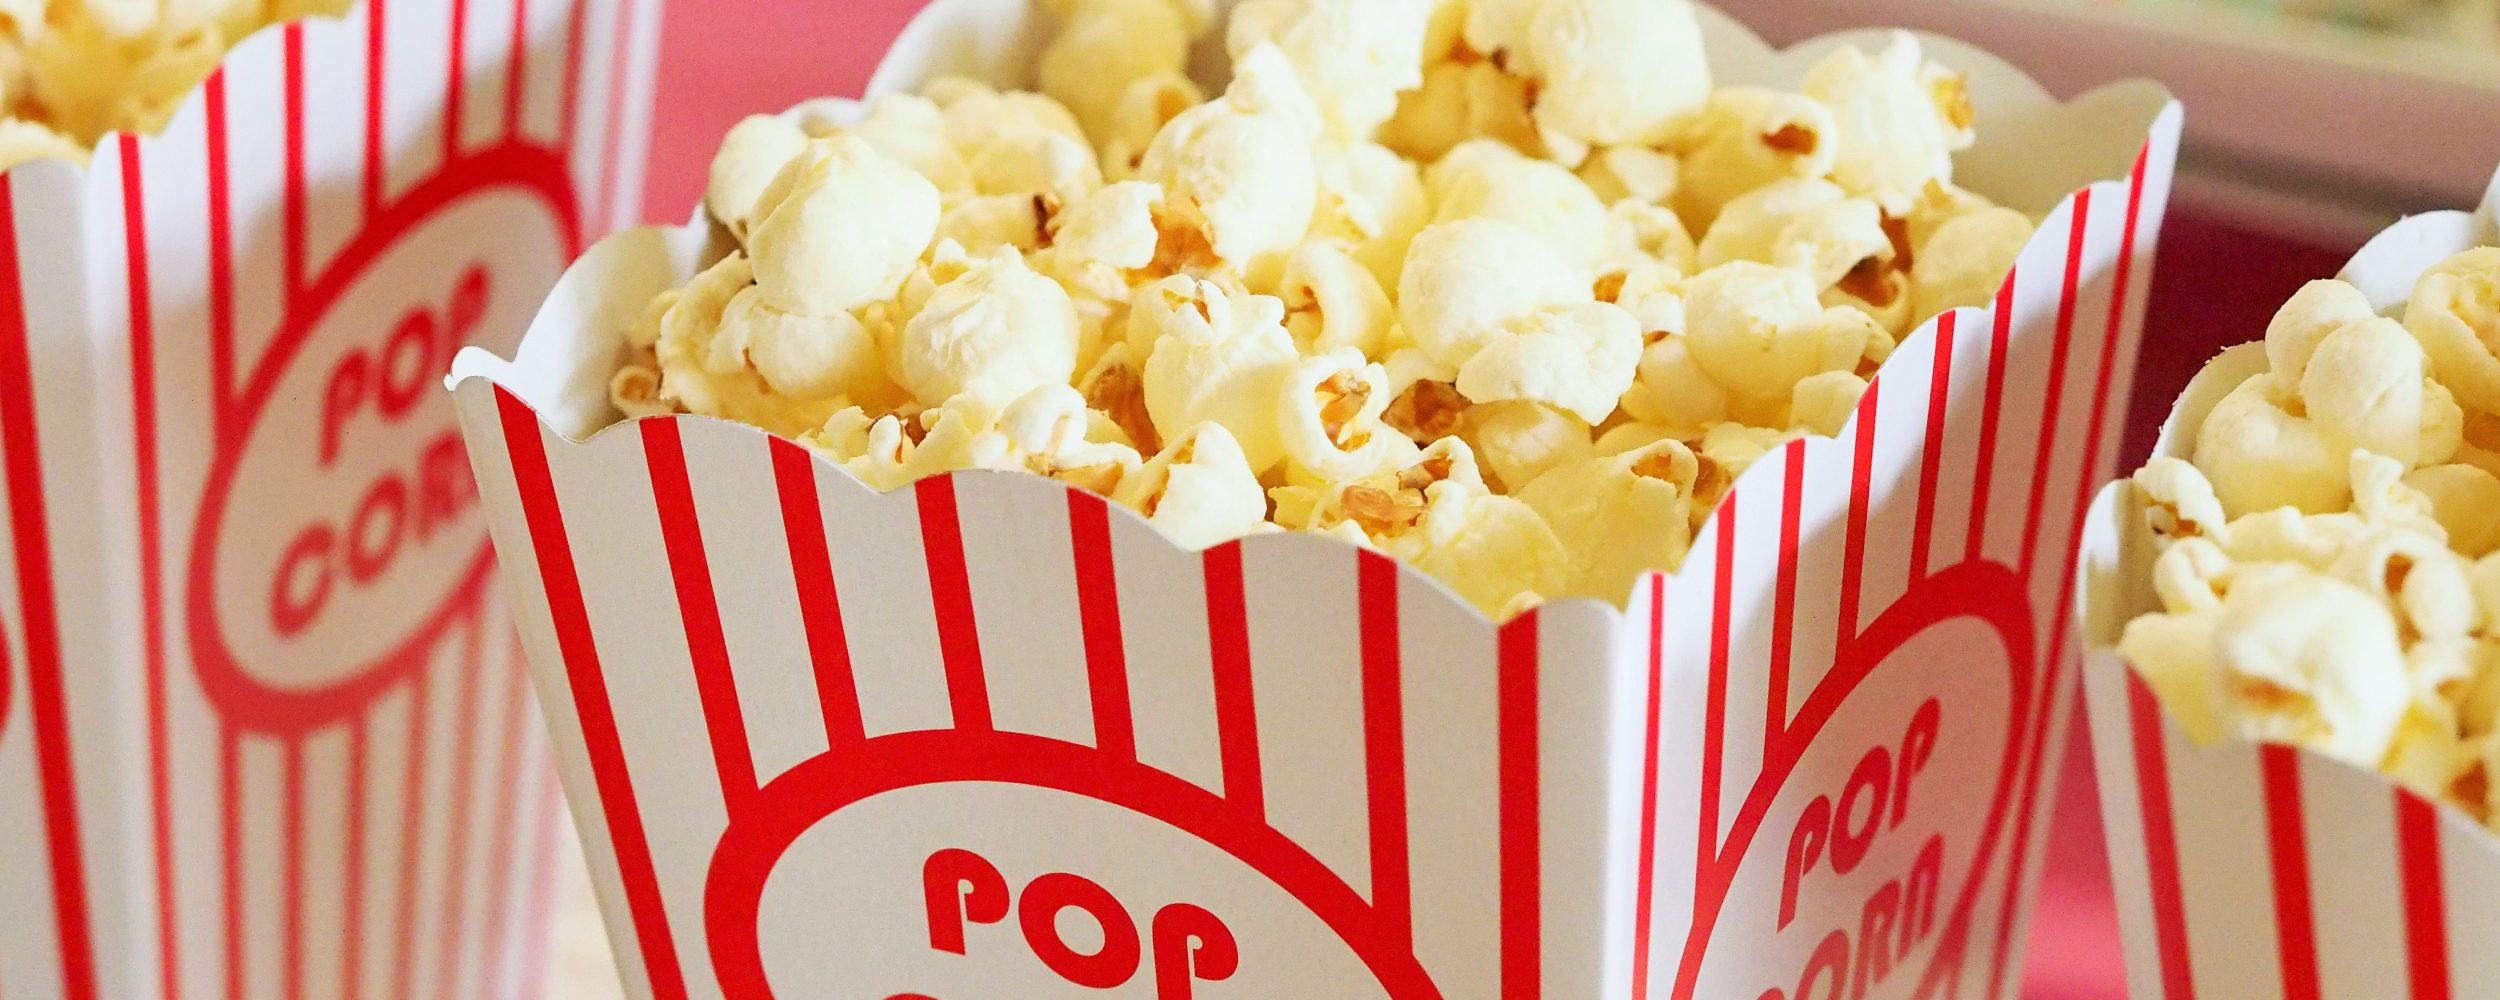 food-snack-popcorn-movie-theater-33129